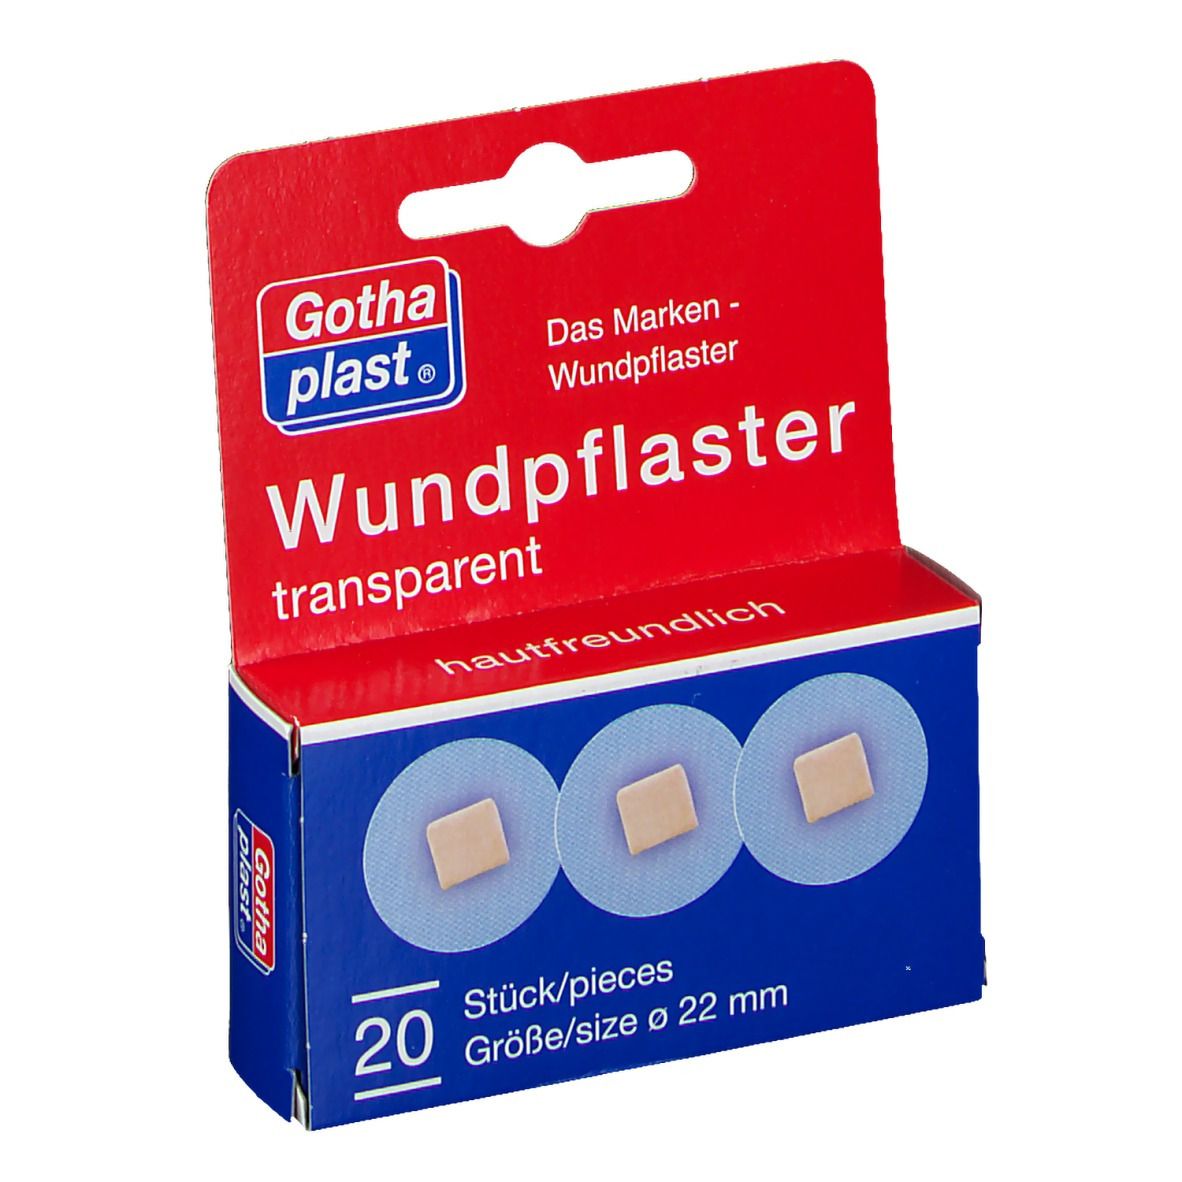 Gothaplast® Wundpflaster 2,2 cm transparent